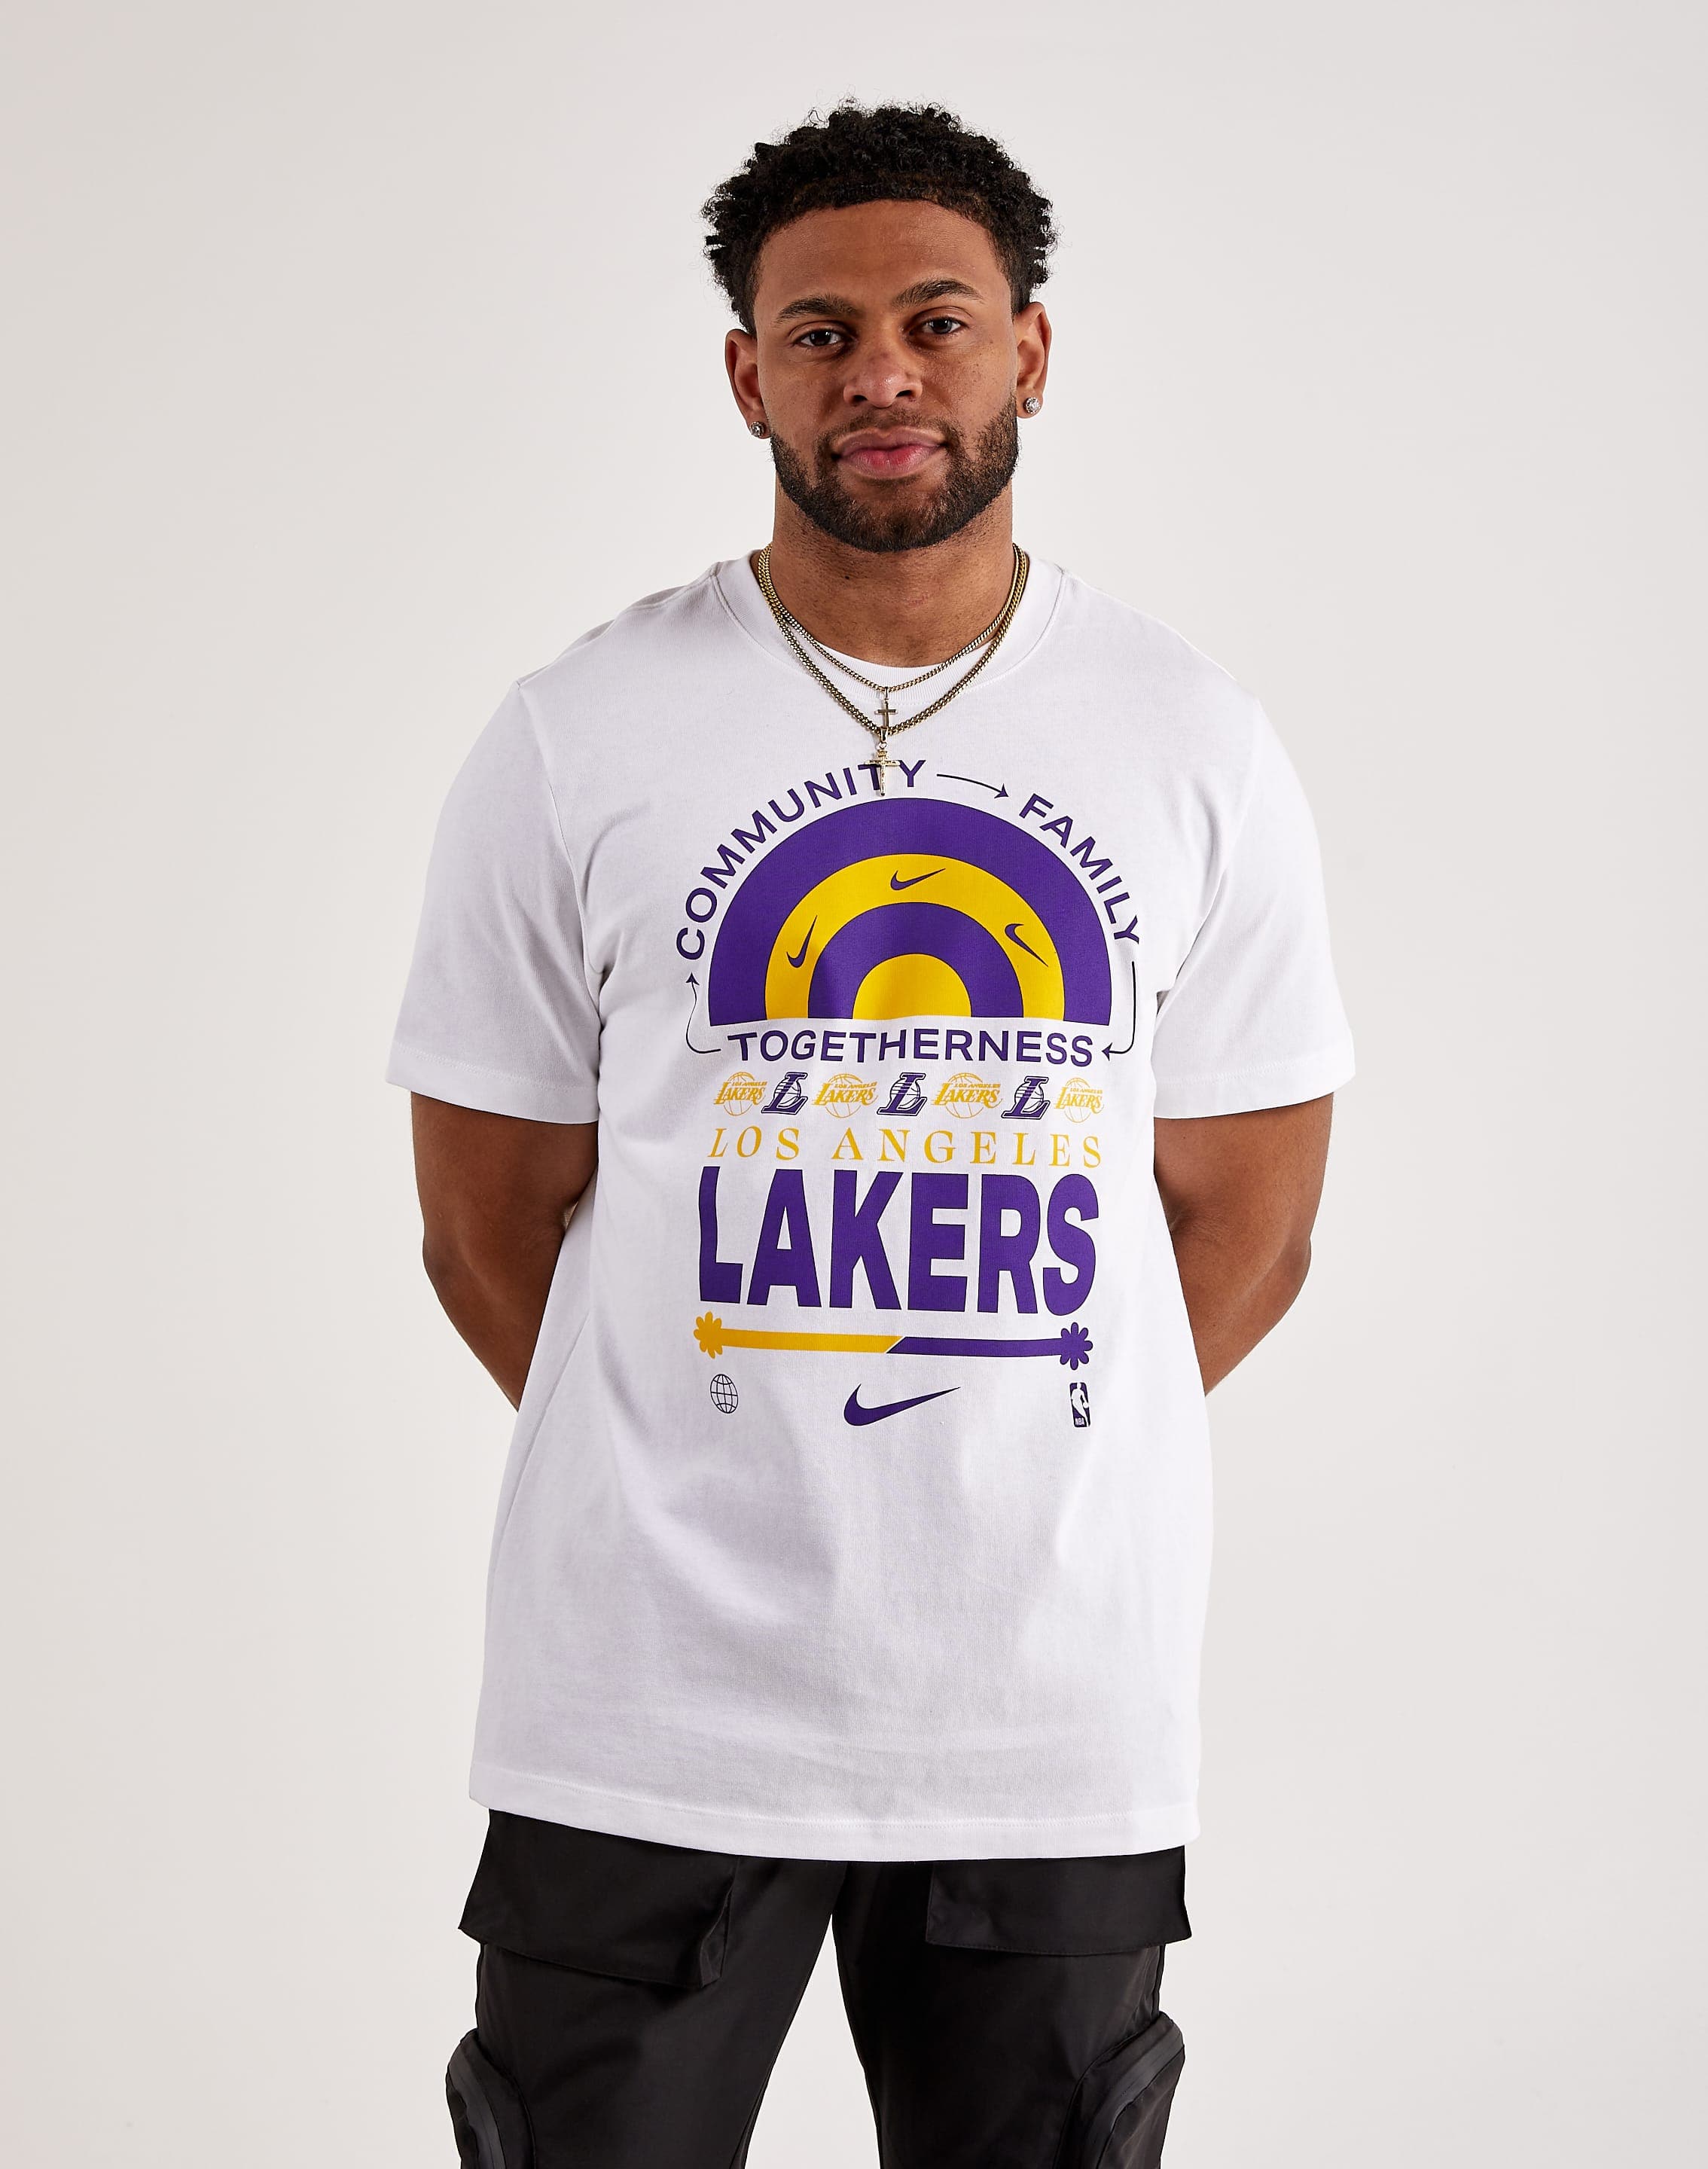 Nike Men's Los Angeles Lakers Purple Logo T-Shirt, Medium